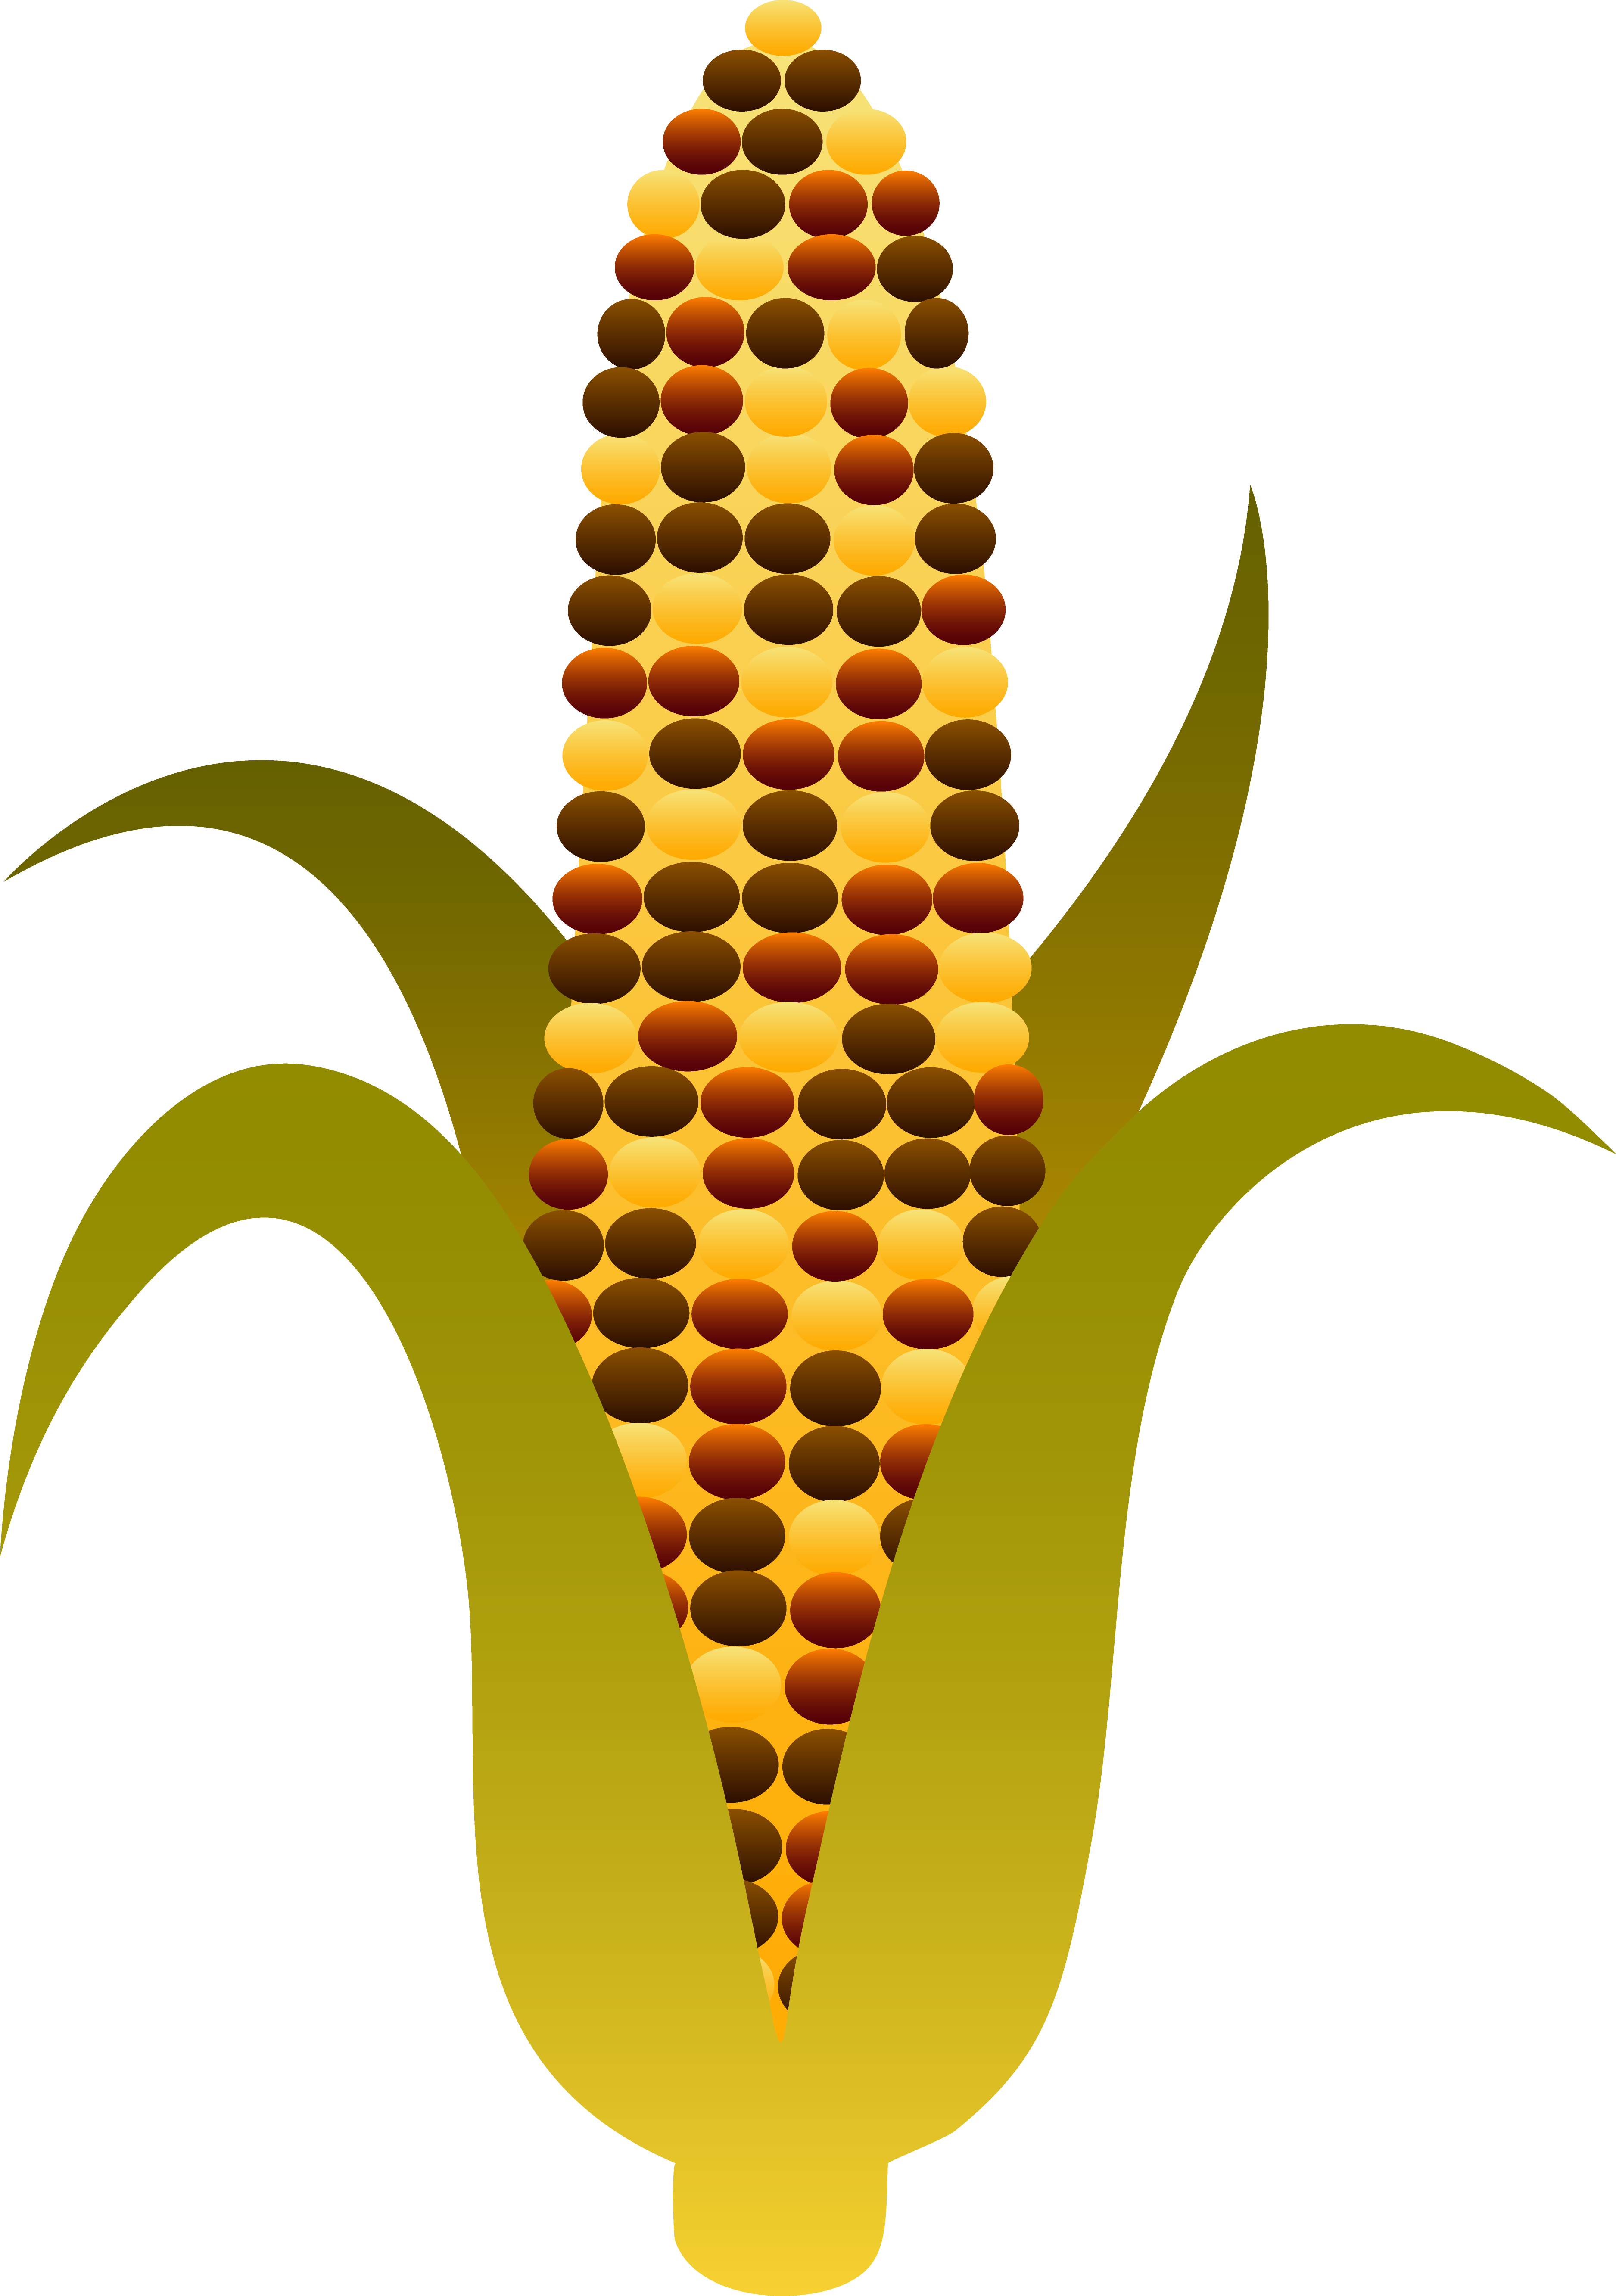 Indian harvest corn maize. Crowd clipart public opinion